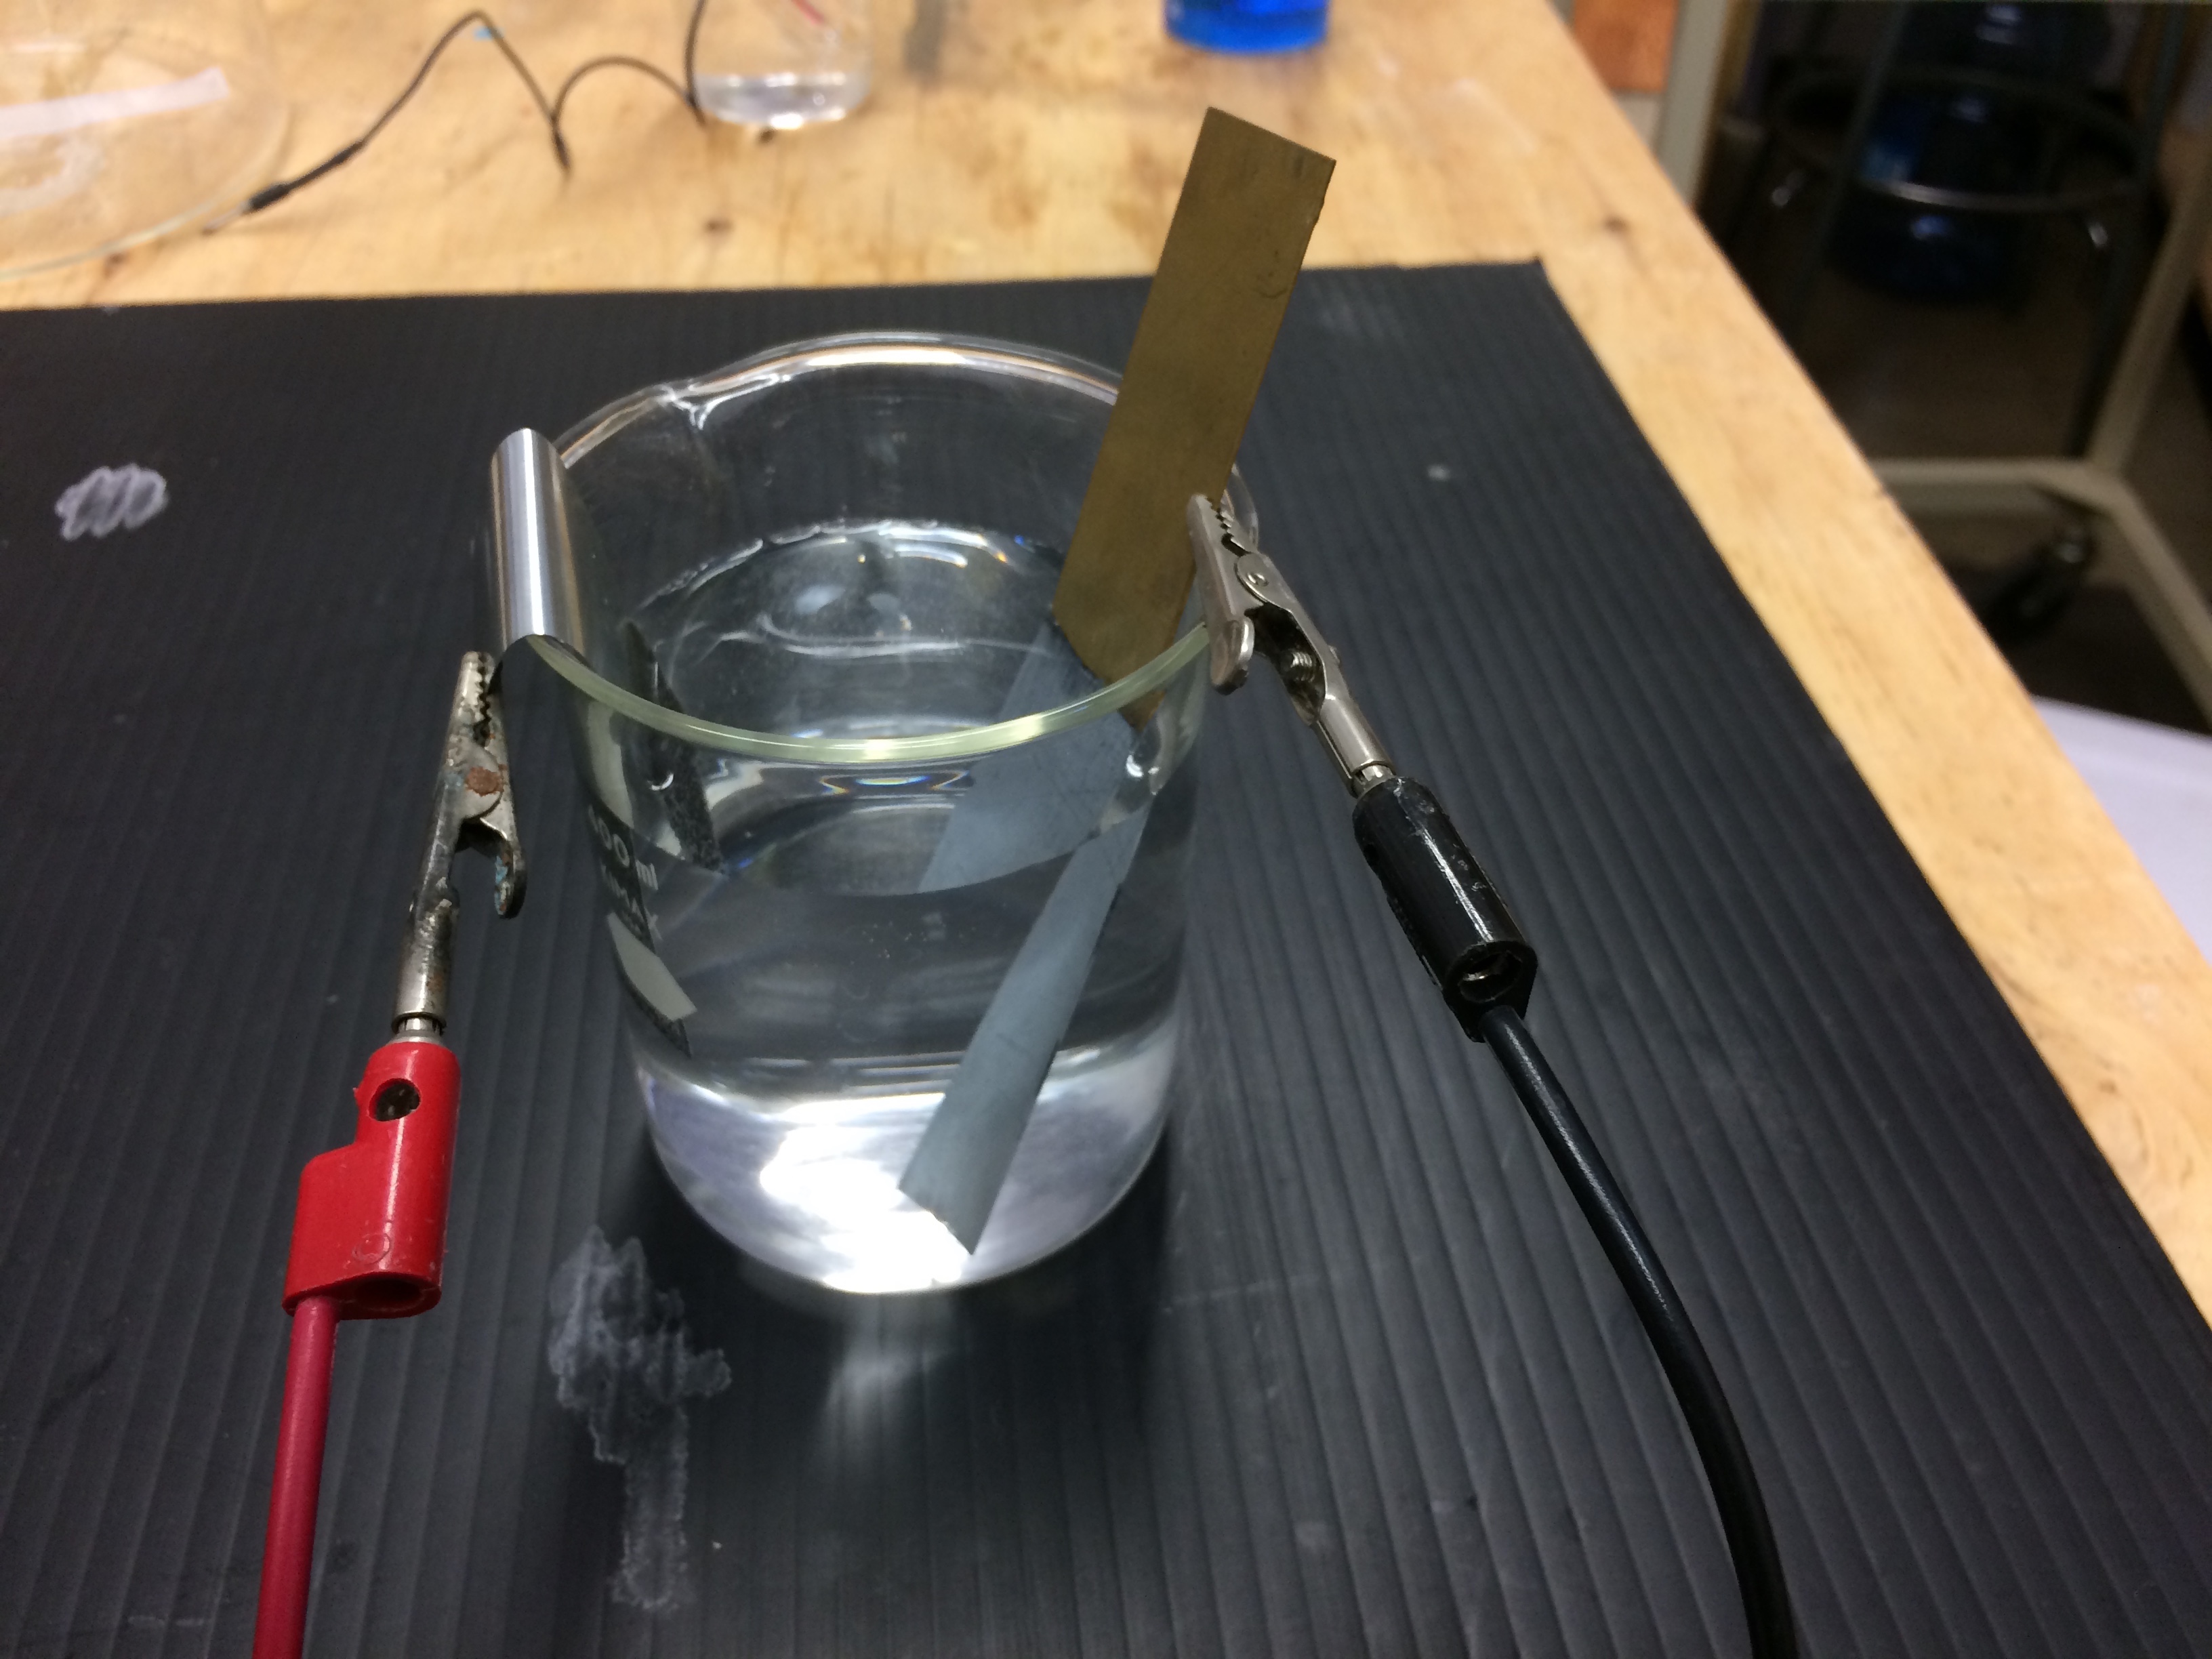 Electrolysis Demonstration: Plate zinc on copper